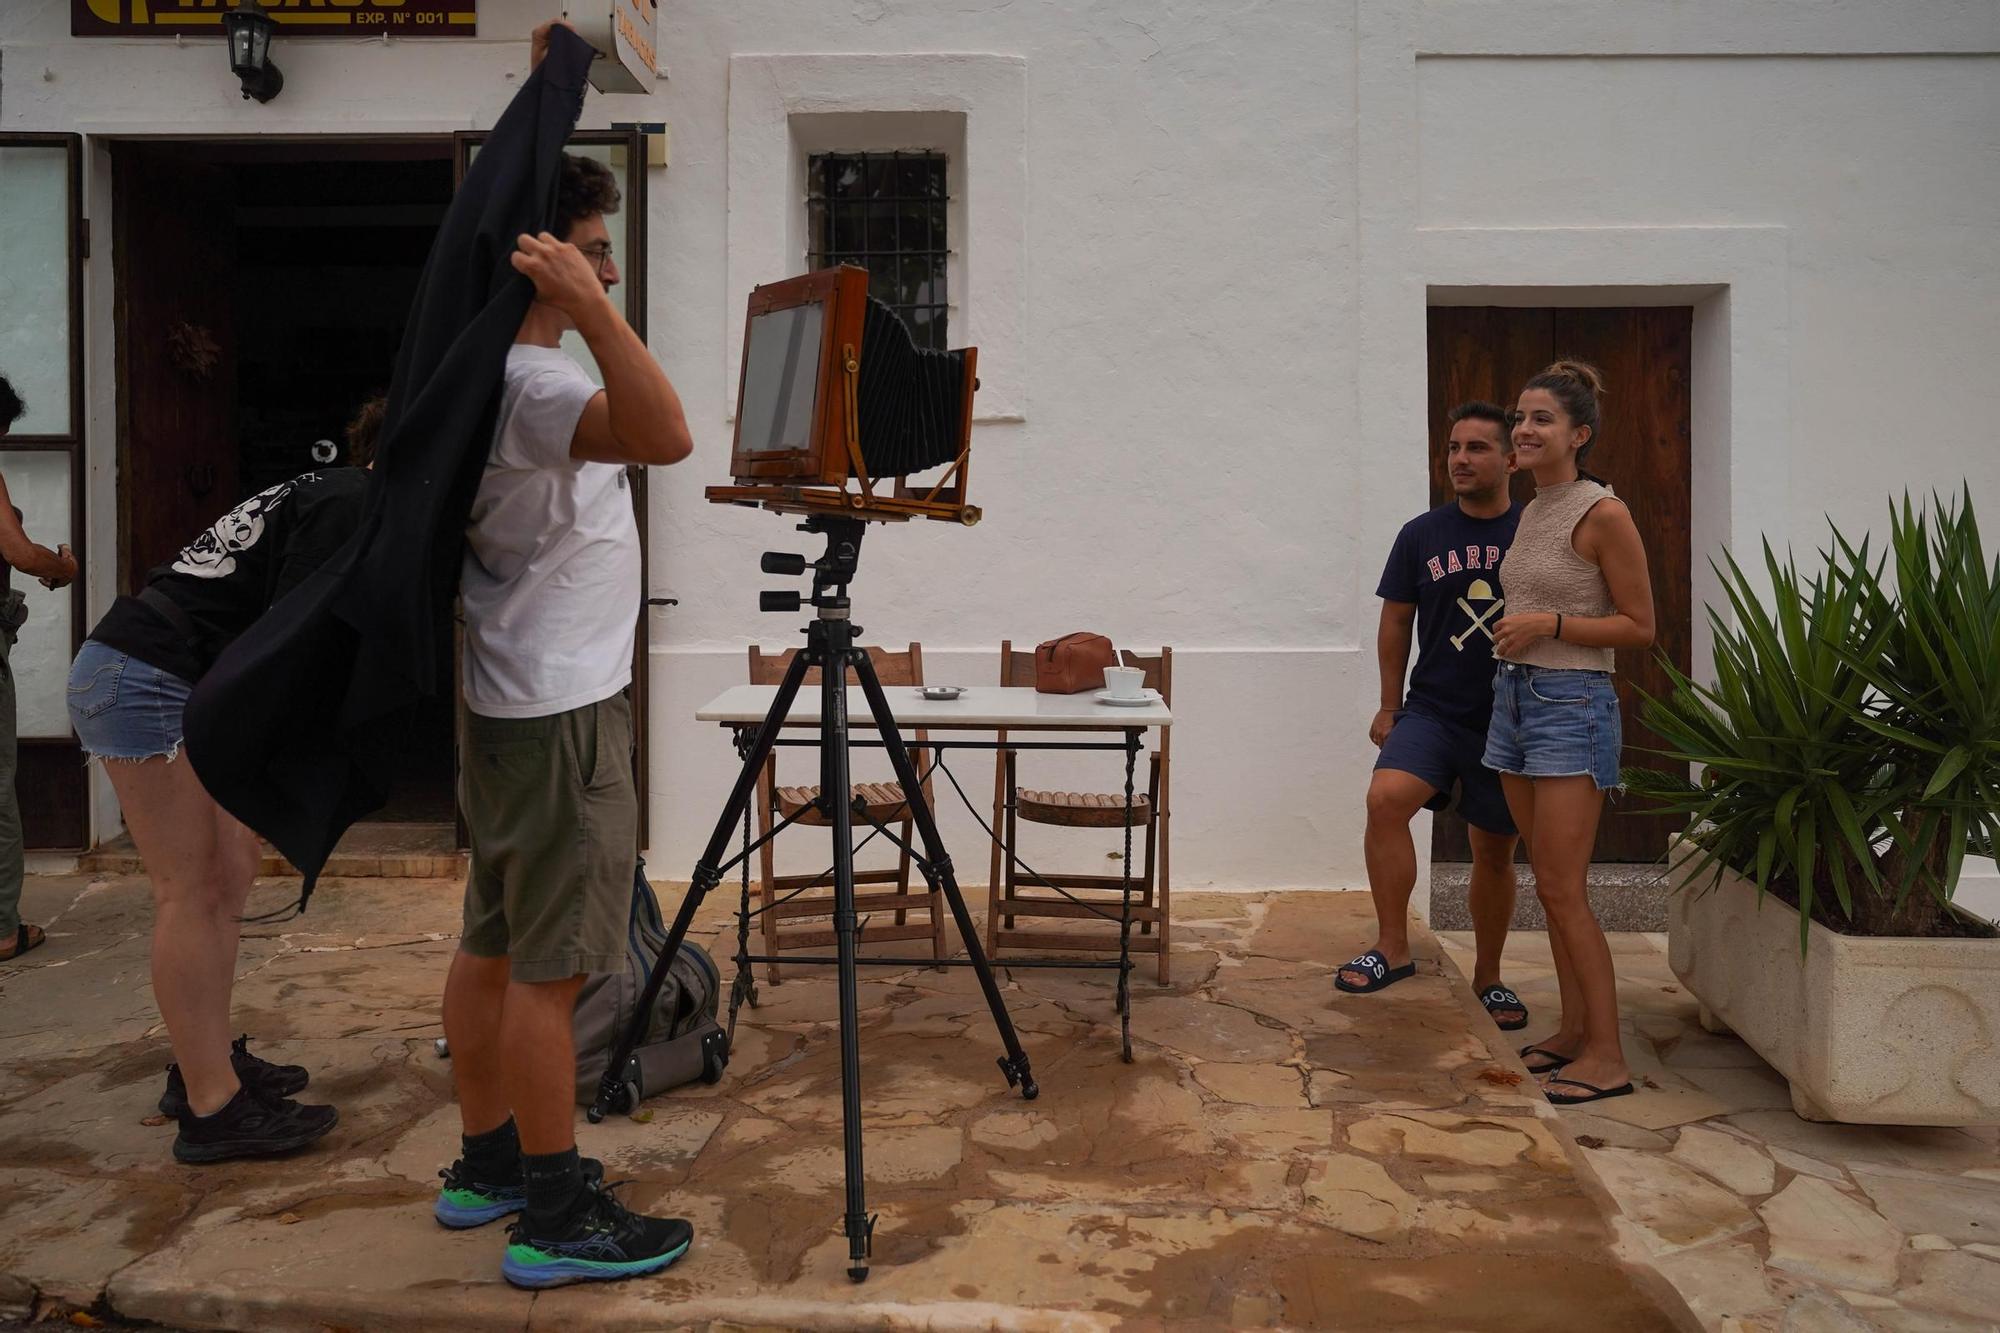 Descubre las fotos del reportaje 'Retratos del XIX en la Ibiza del siglo XXI'